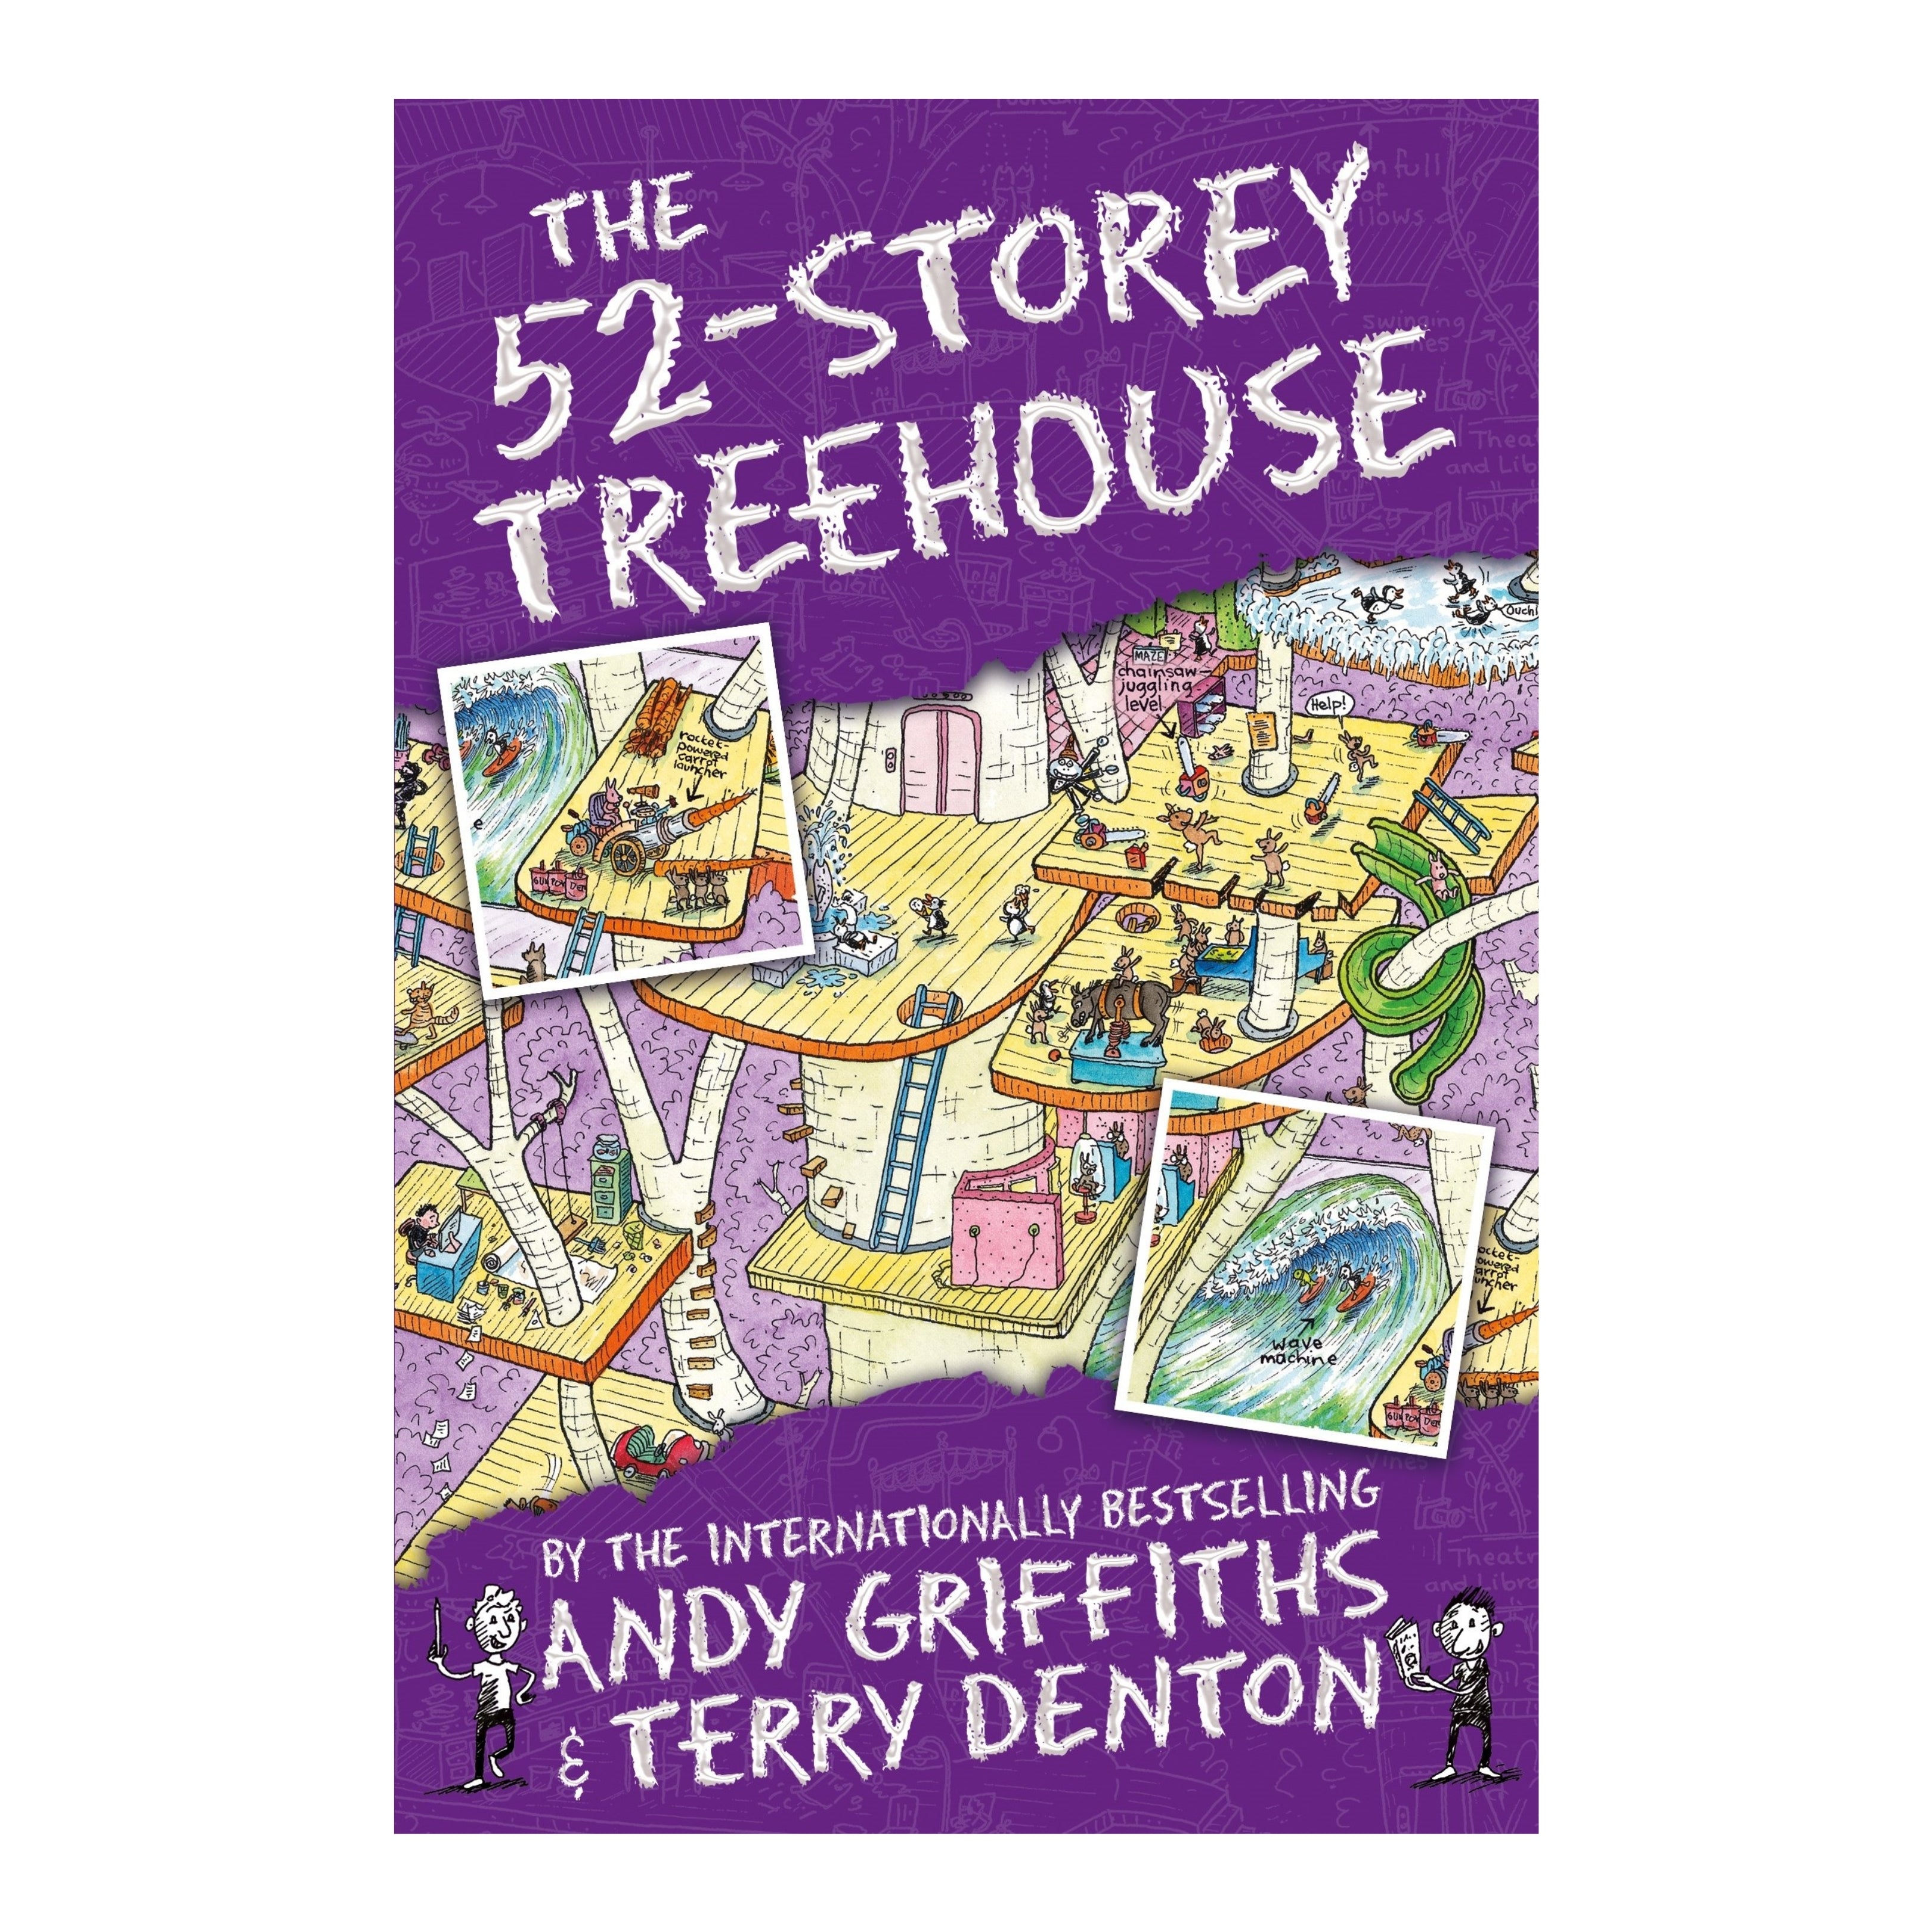 The 52-Storey Treehouse - The English Bookshop